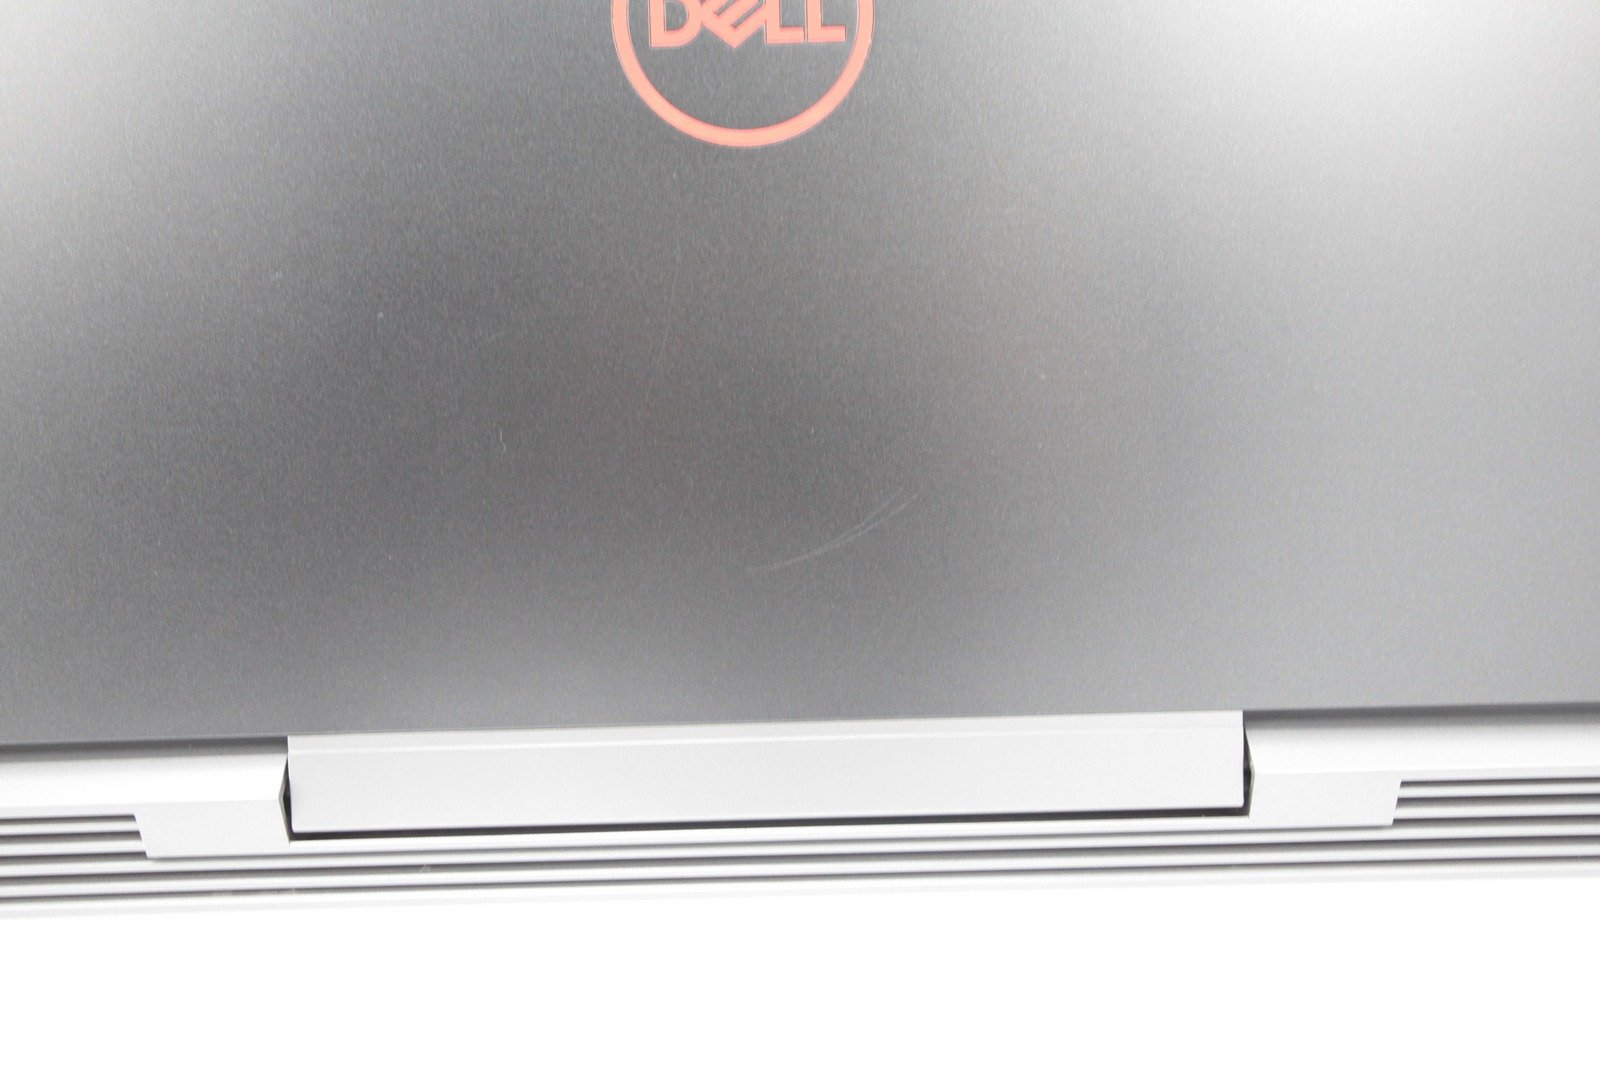 Dell 15 G5 5587 FHD Gaming Laptop: i5-8300H, GTX 1050, 8GB RAM, 128GB SSD+HDD - CruiseTech